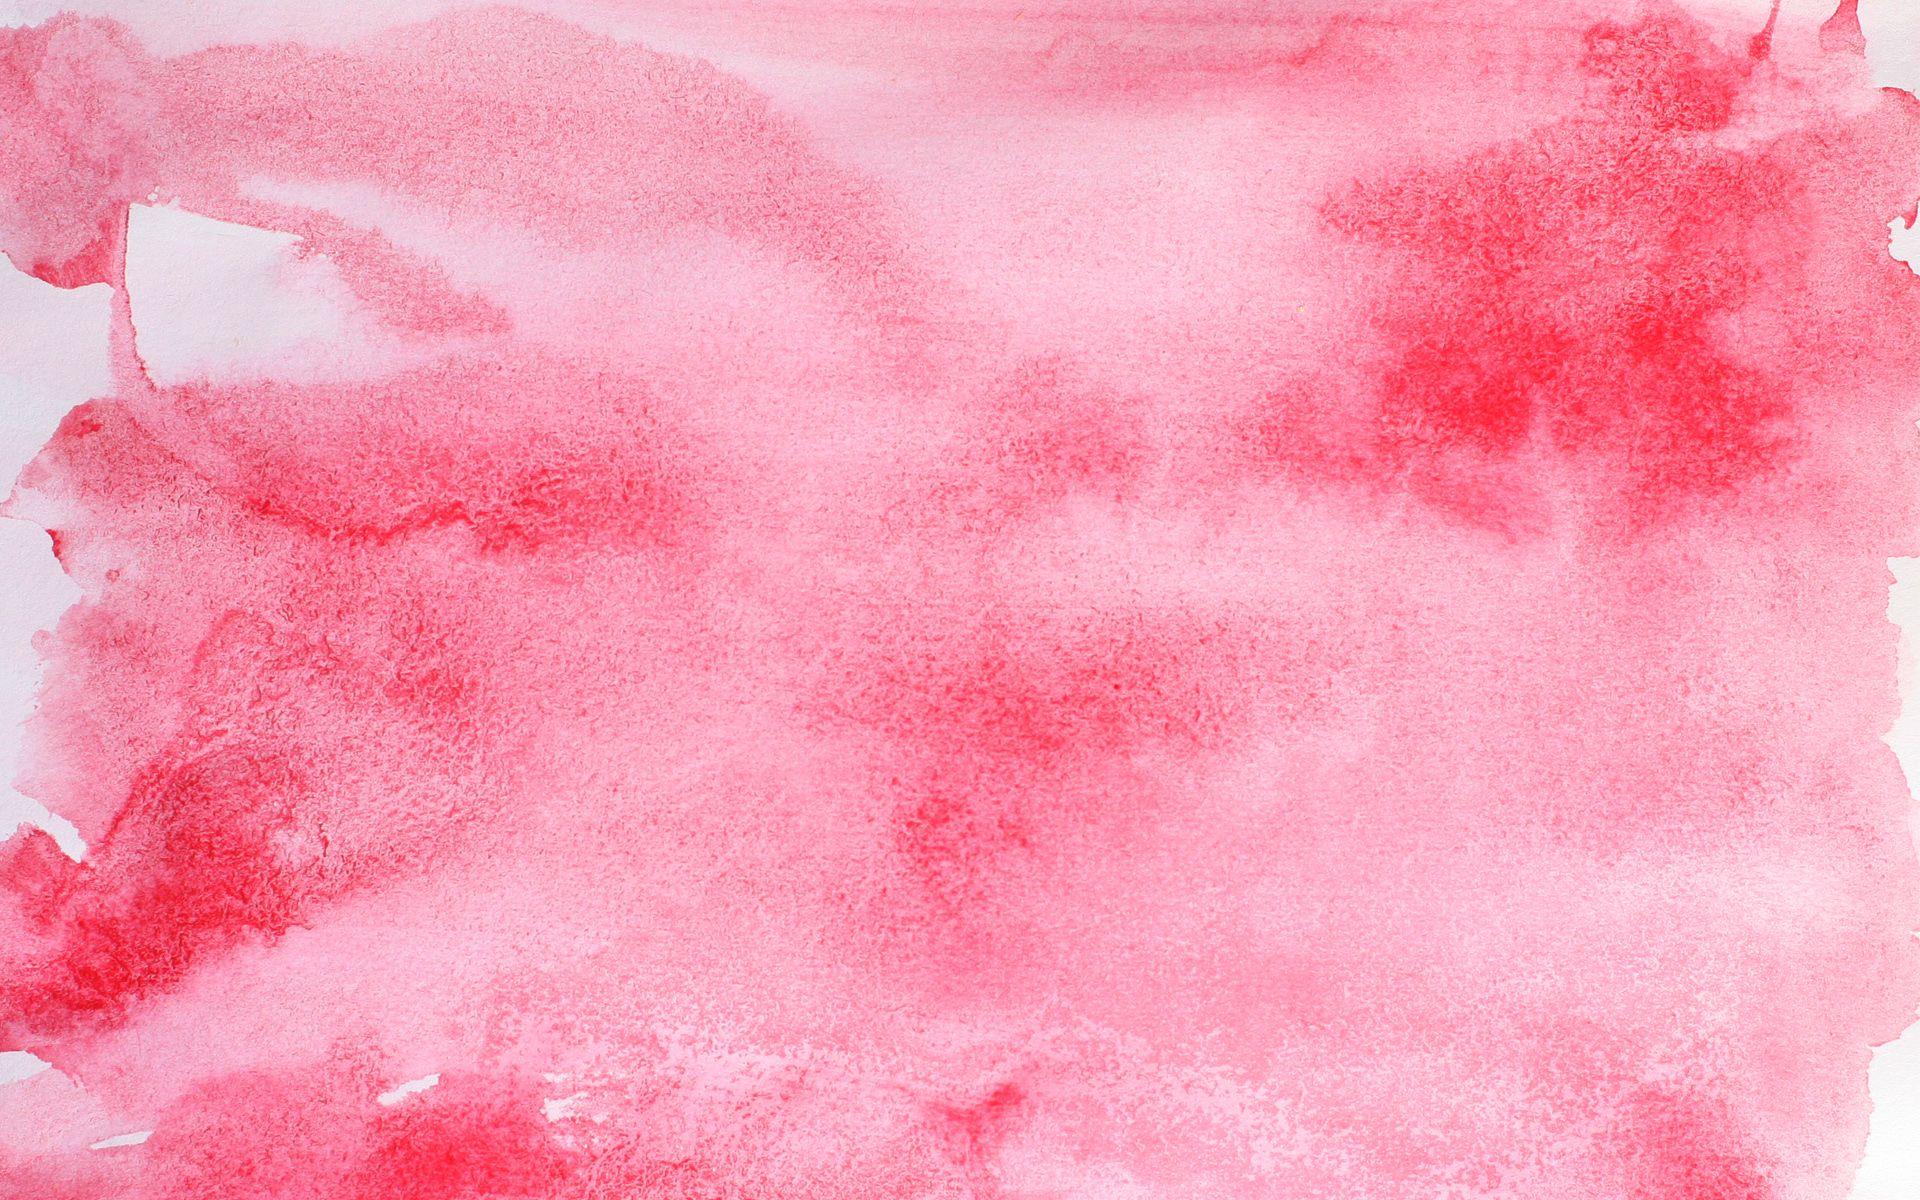 Aesthetic Pink Desktop Wallpapers - Top Free Aesthetic Pink Desktop